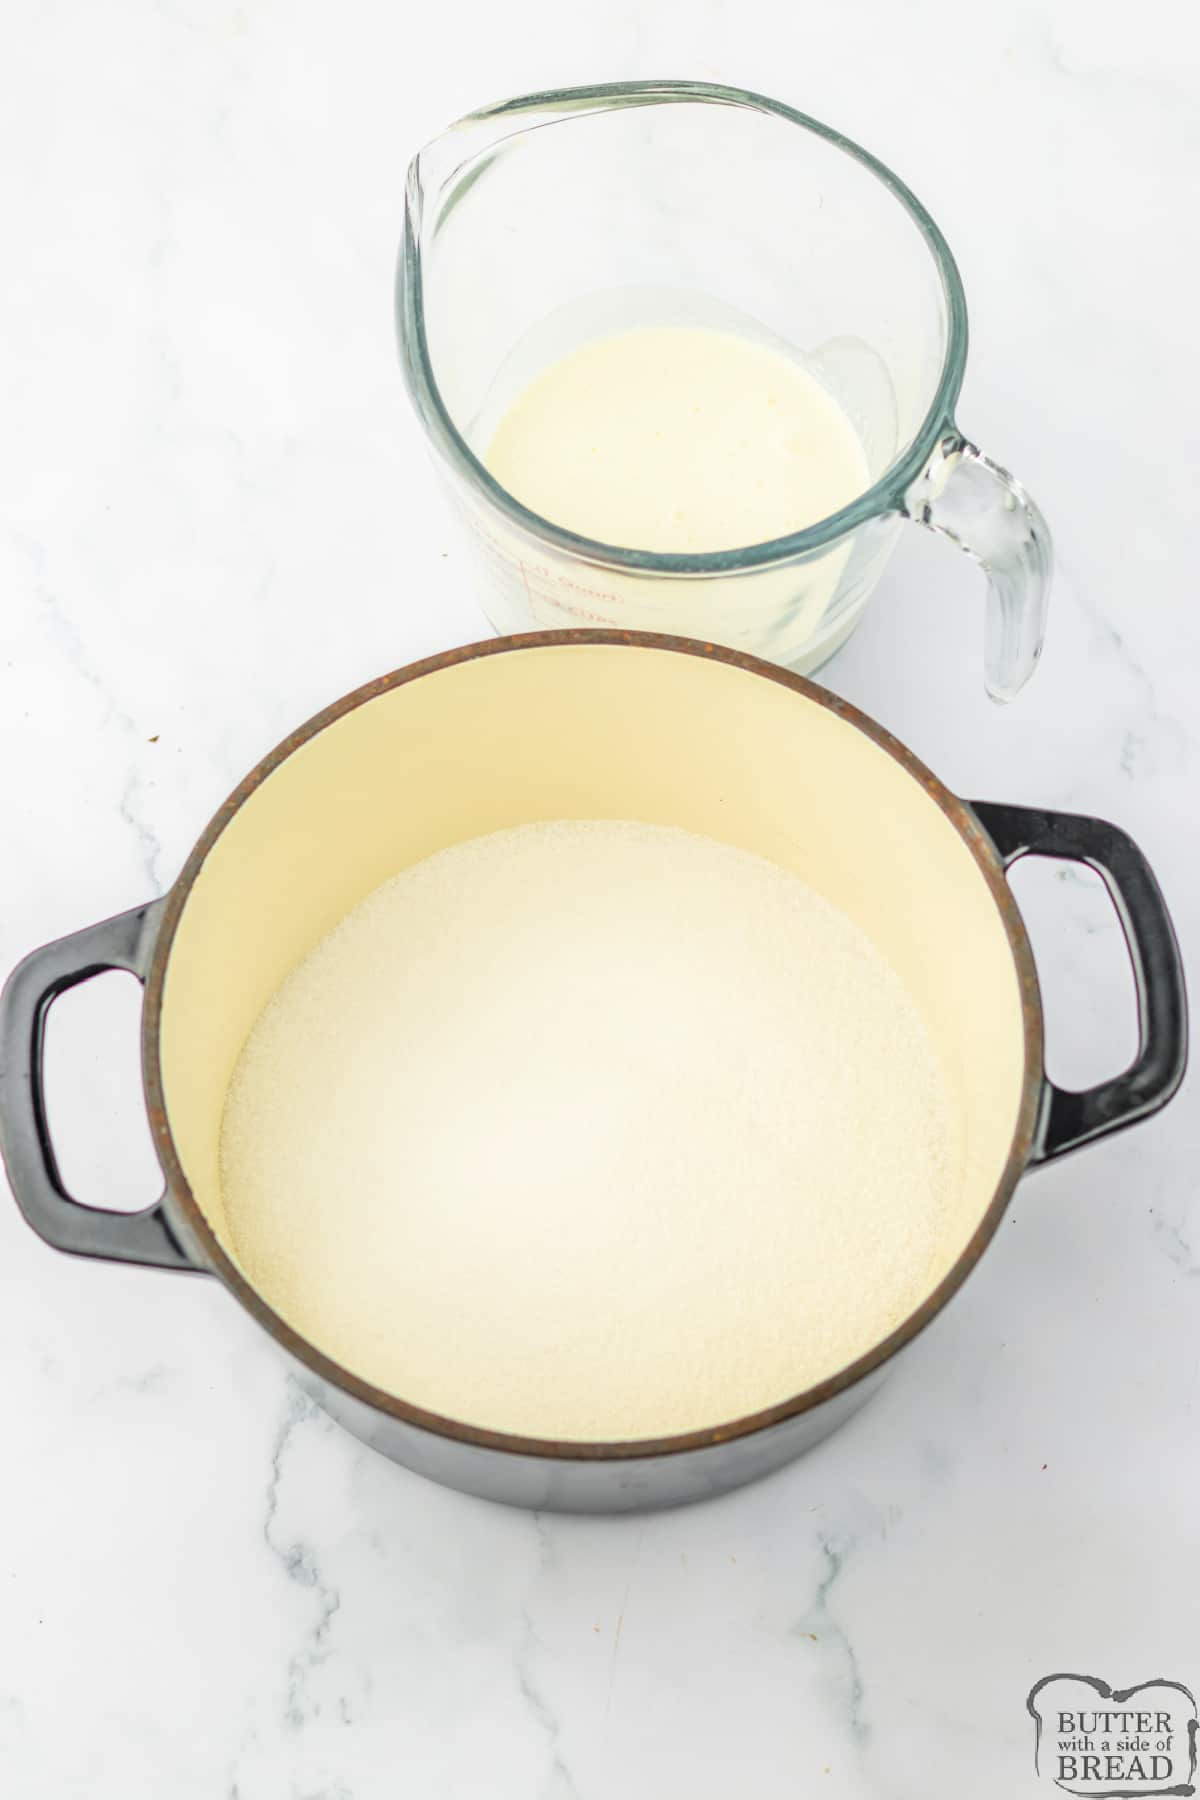 Sugar and cream in pot to make homemade caramel recipe.